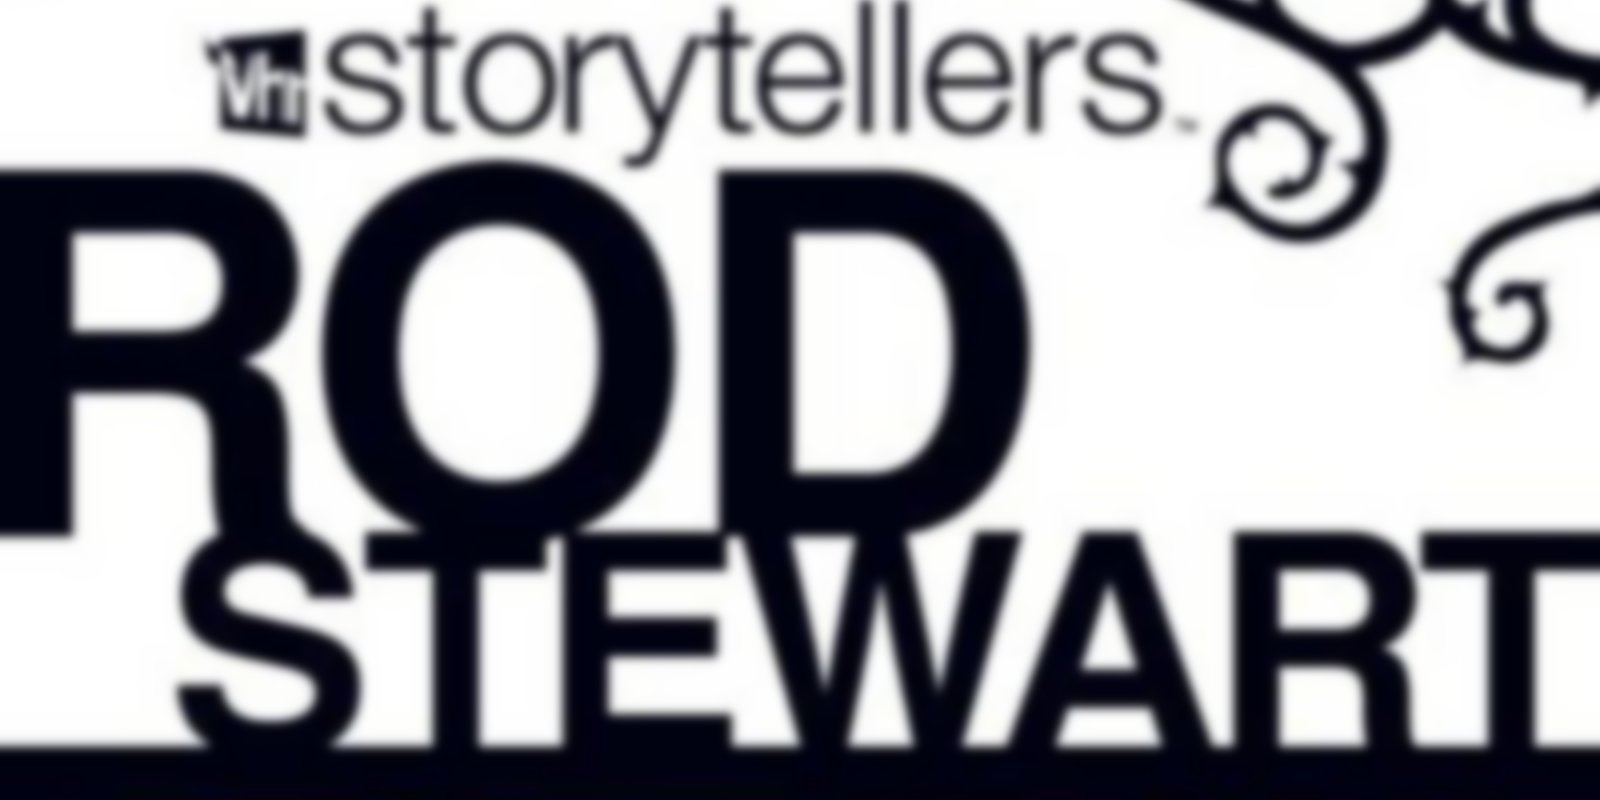 VH-1 Storytellers - Rod Stewart